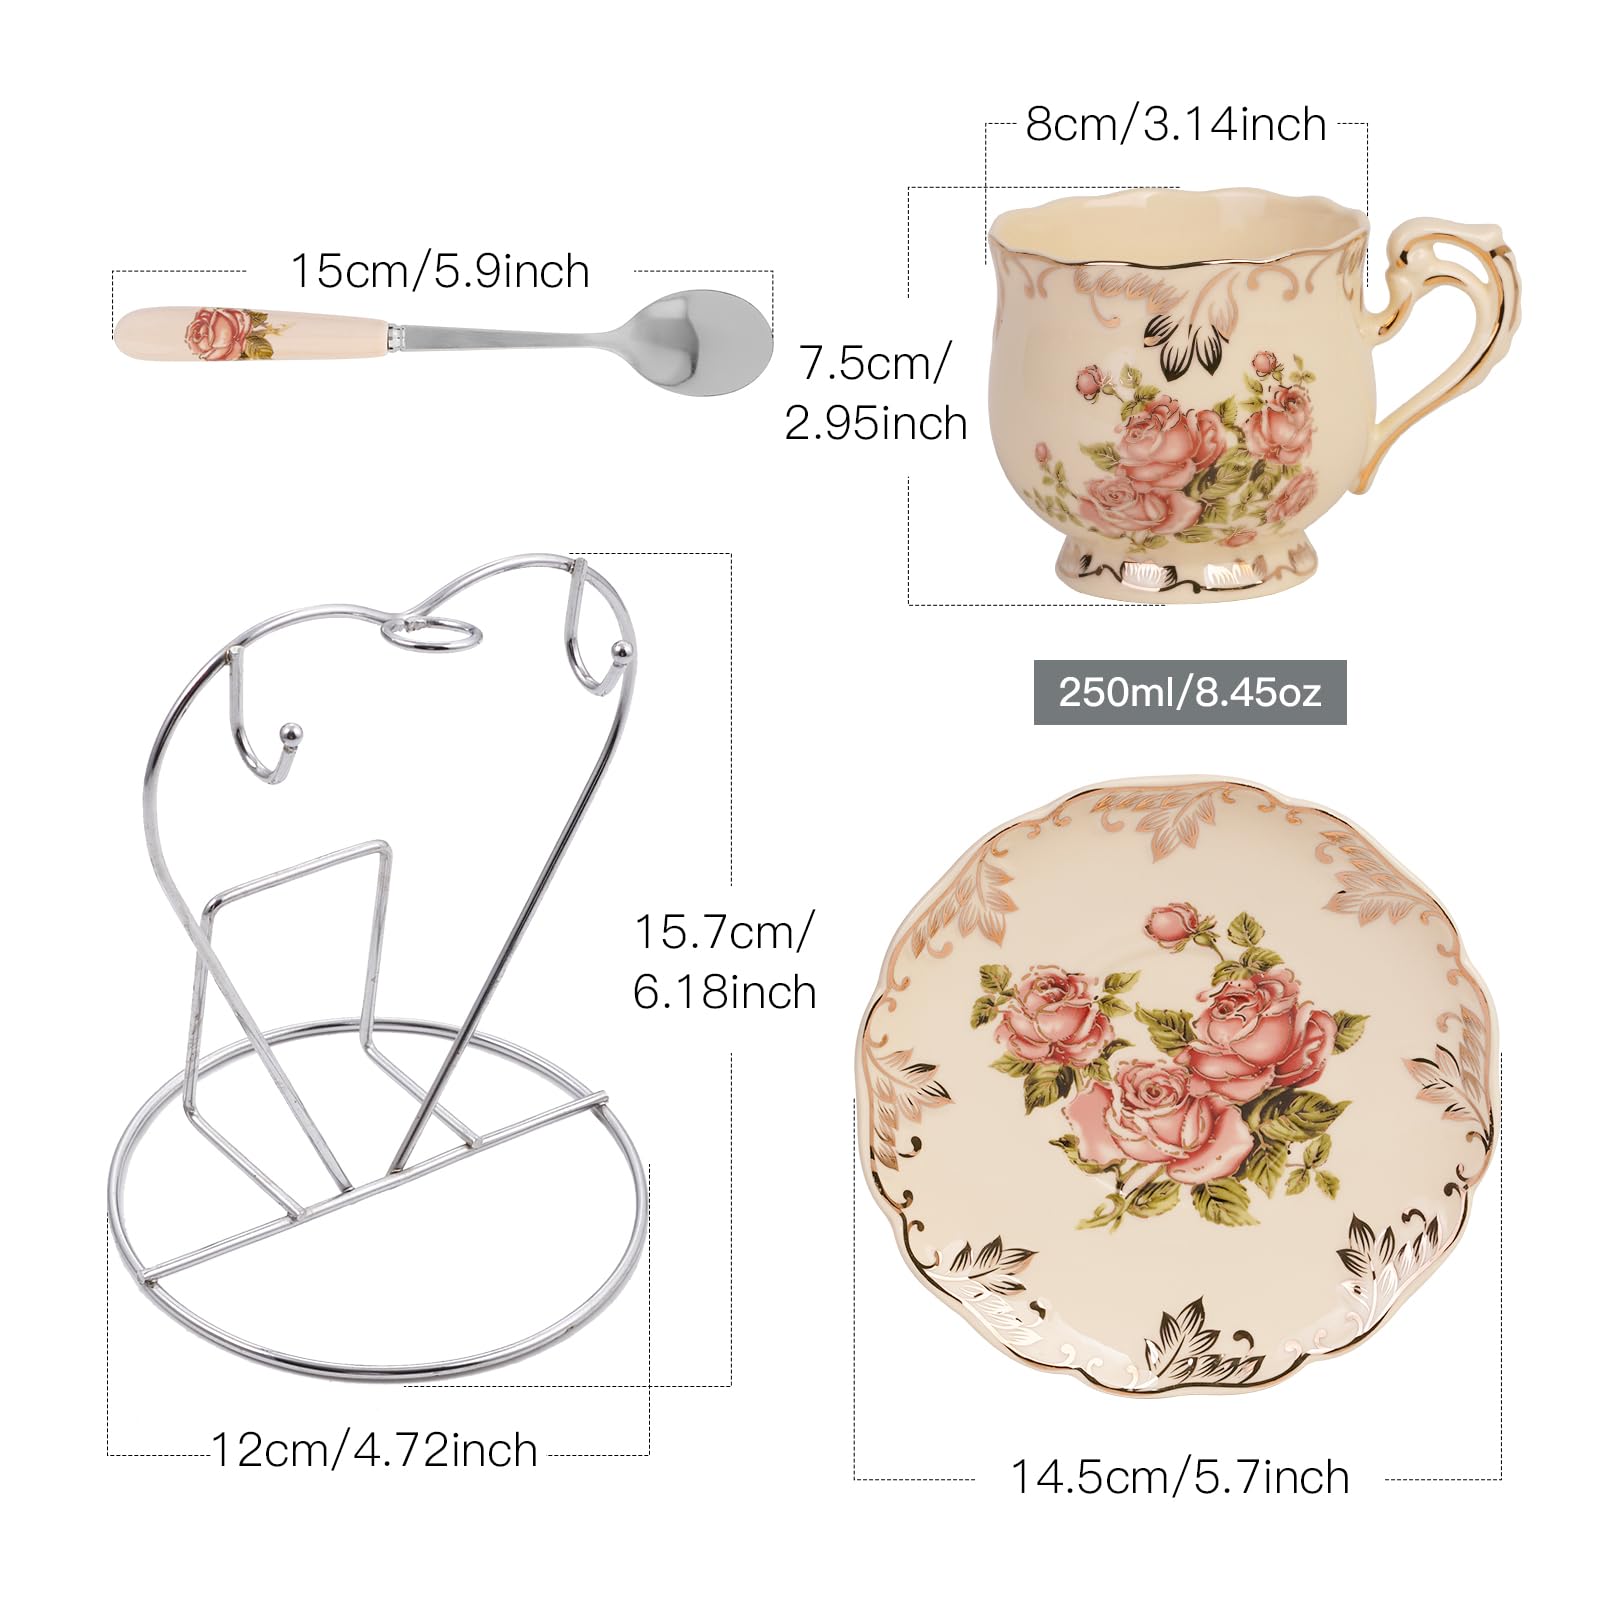 YOLIFE Tea Cups and Saucers Set of 2, Porcelain Floral Tea Cups Set with Holder, Fancy Vintage Tea Cups 8 oz